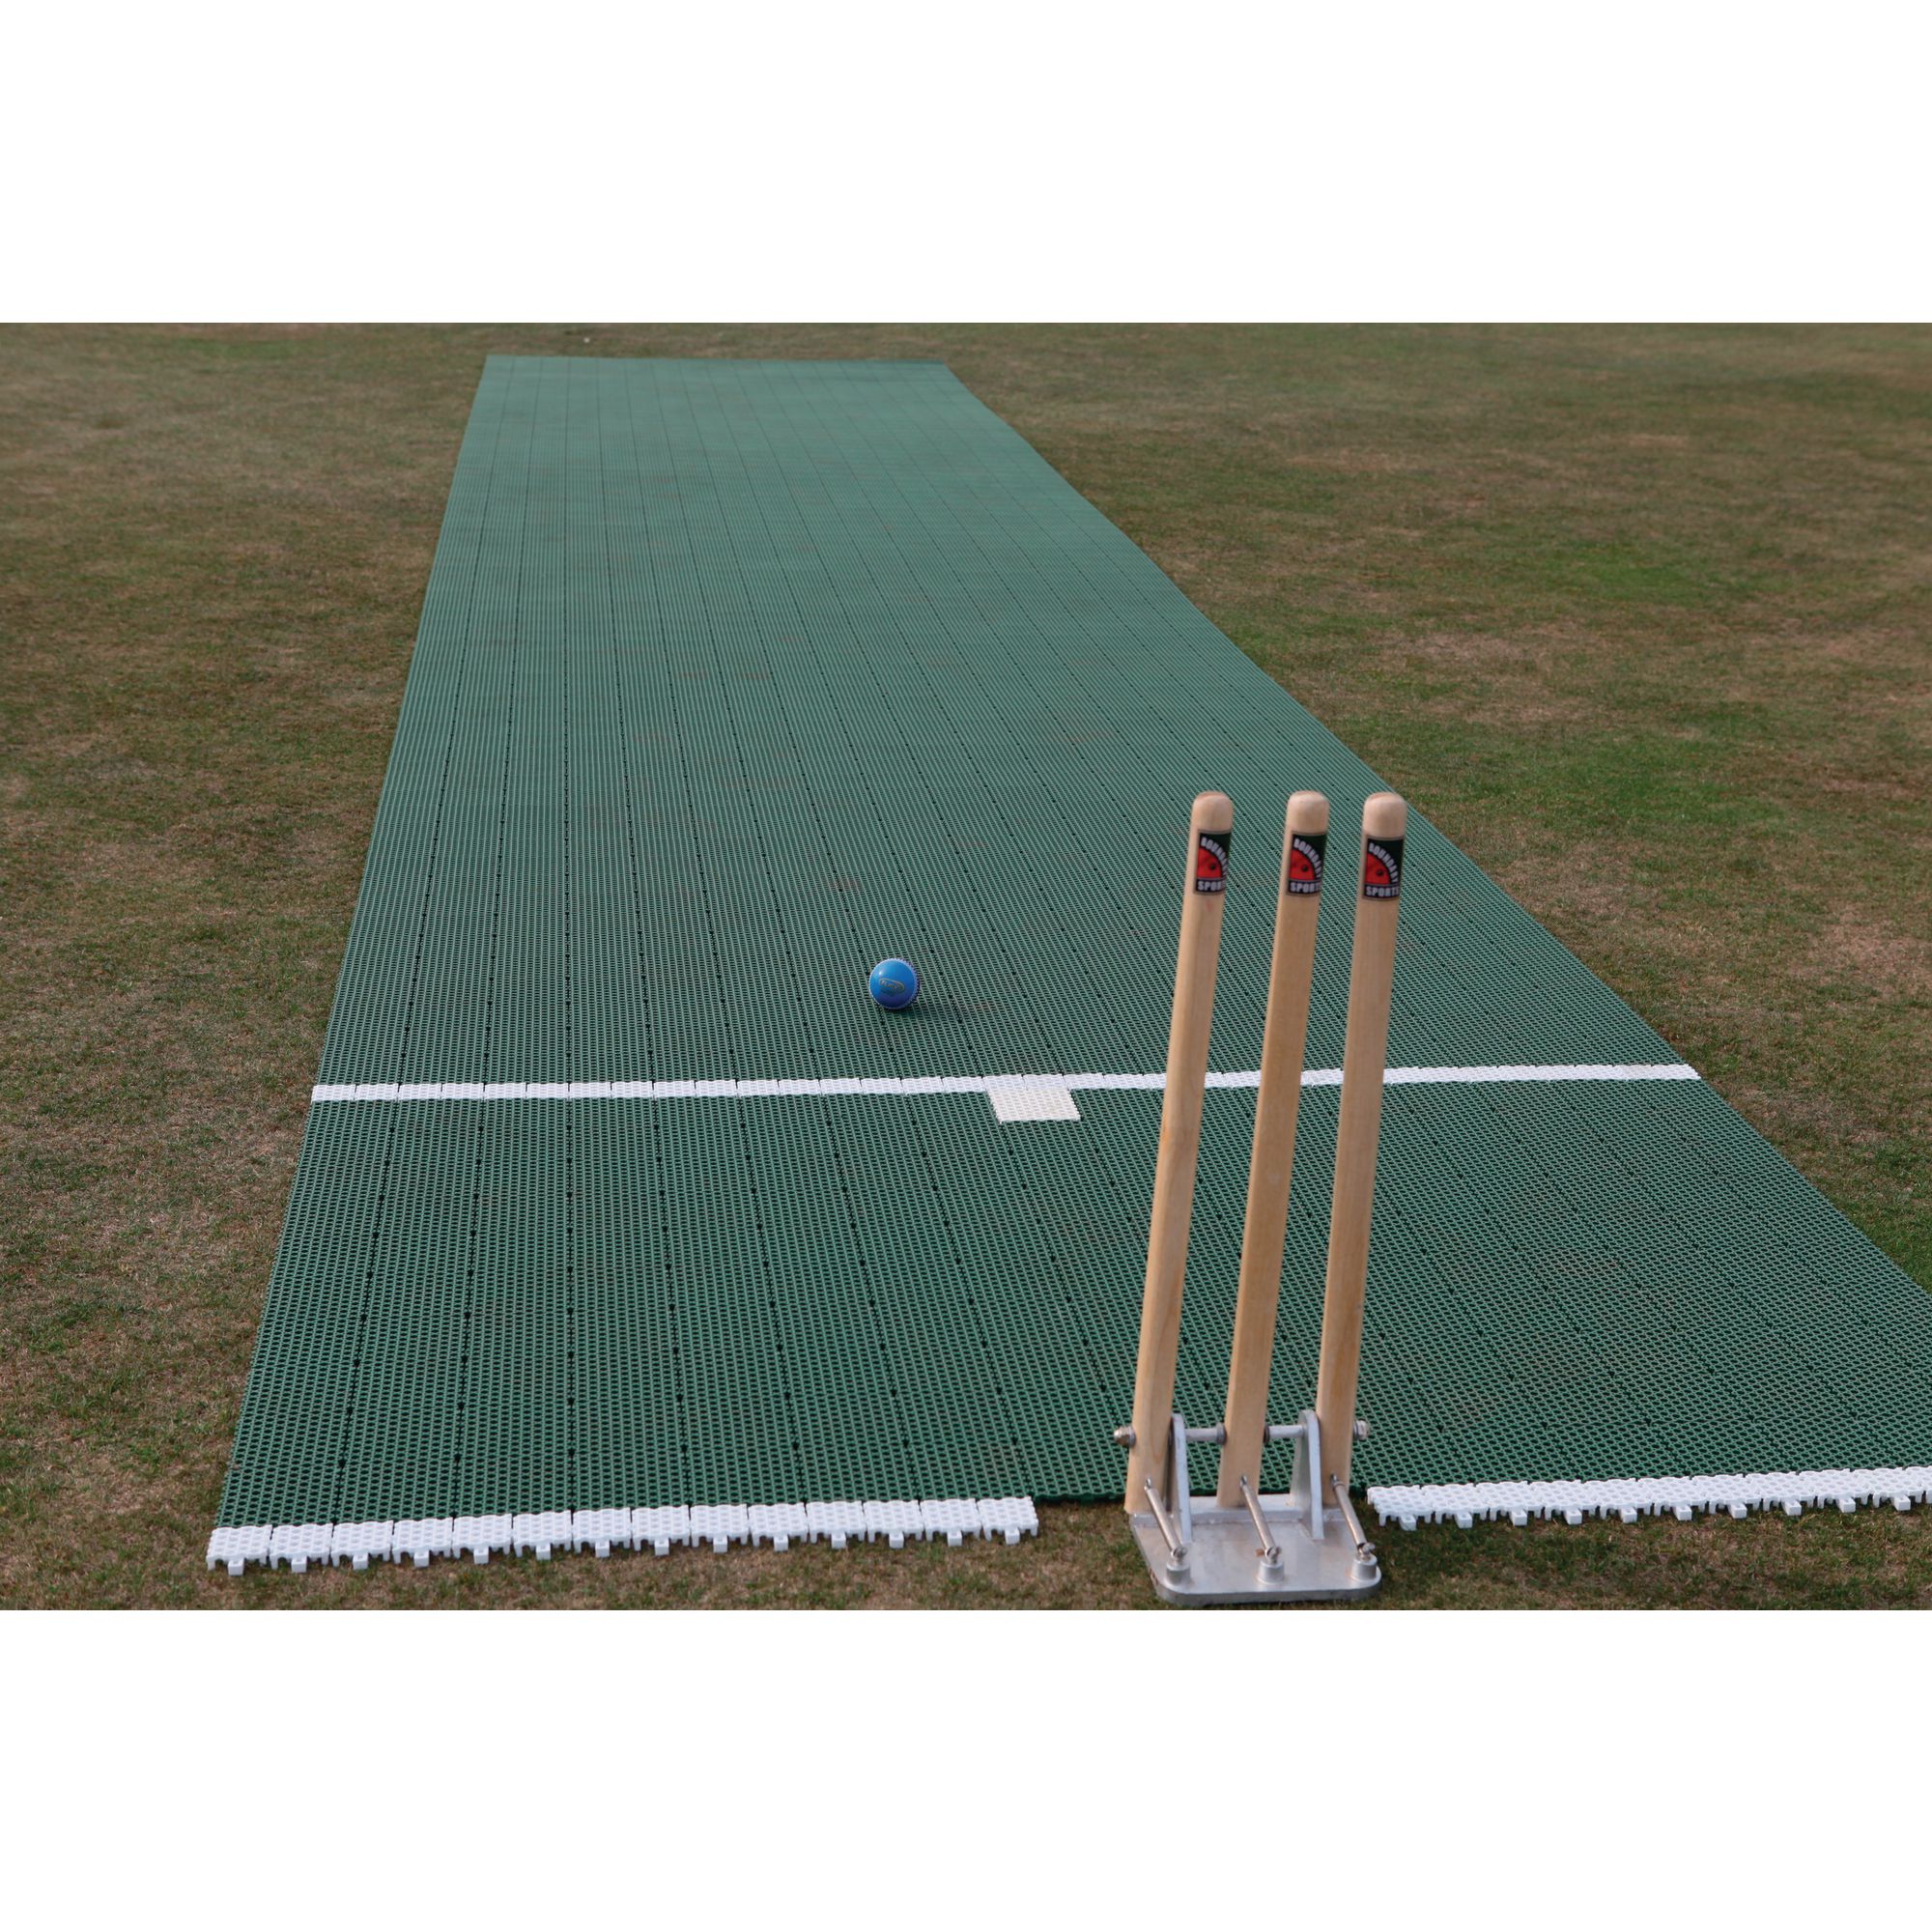 Flicx Cricket Match Pitch 16.12x1.8m